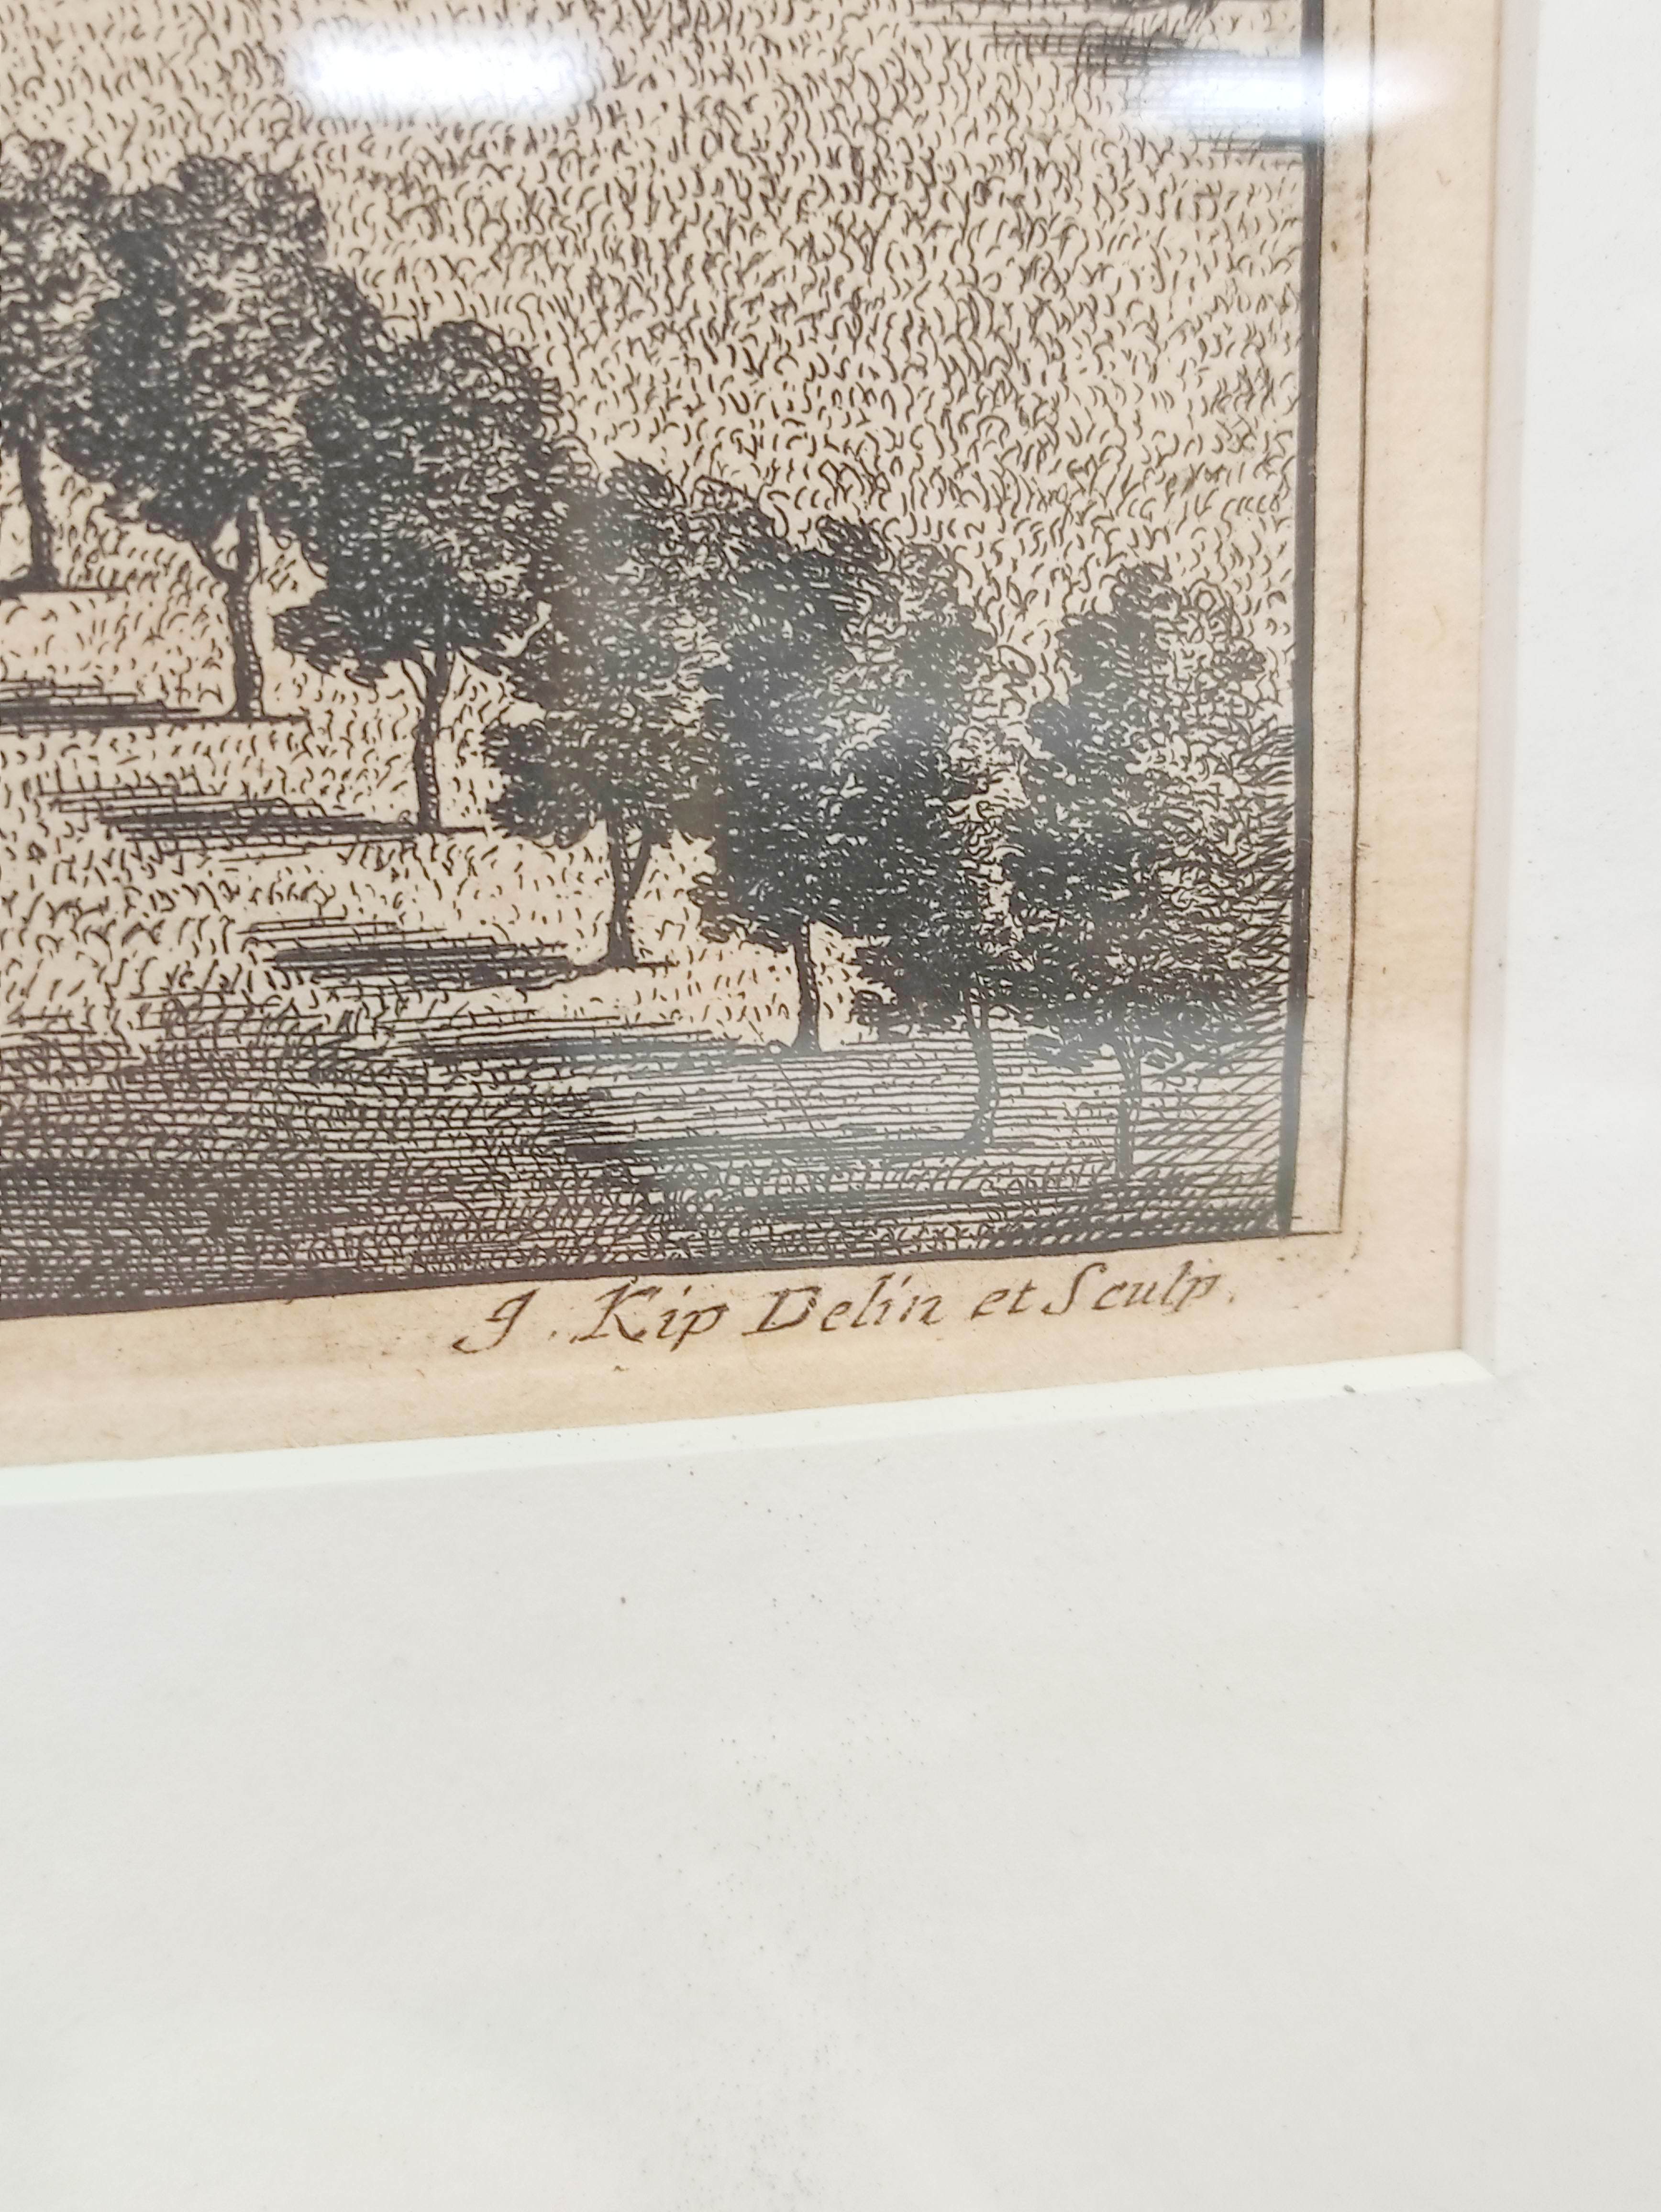 KIP JOHANNES.  Alveston, The Seat of Edward Hill Esquire. Good 18th cent. engraving, 36cm x 45cm, - Image 5 of 6